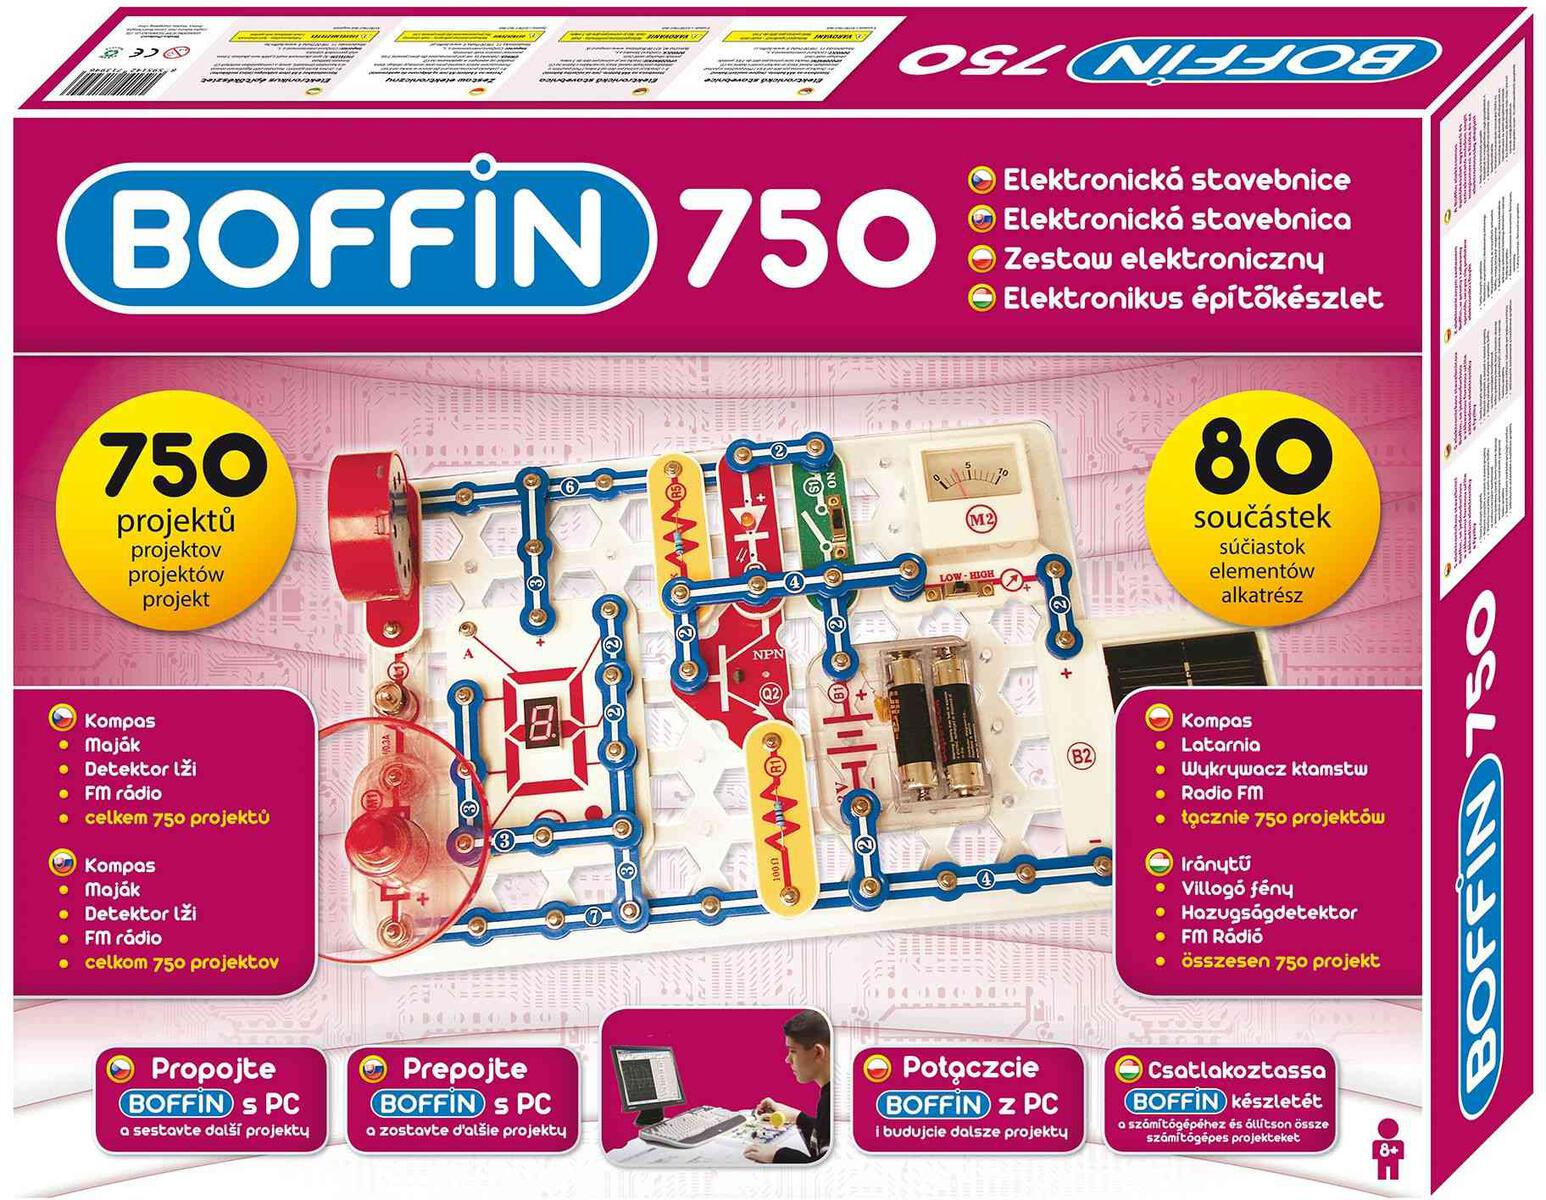 Elektronická stavebnice Boffin I 750 + DOPRAVA ZDARMA